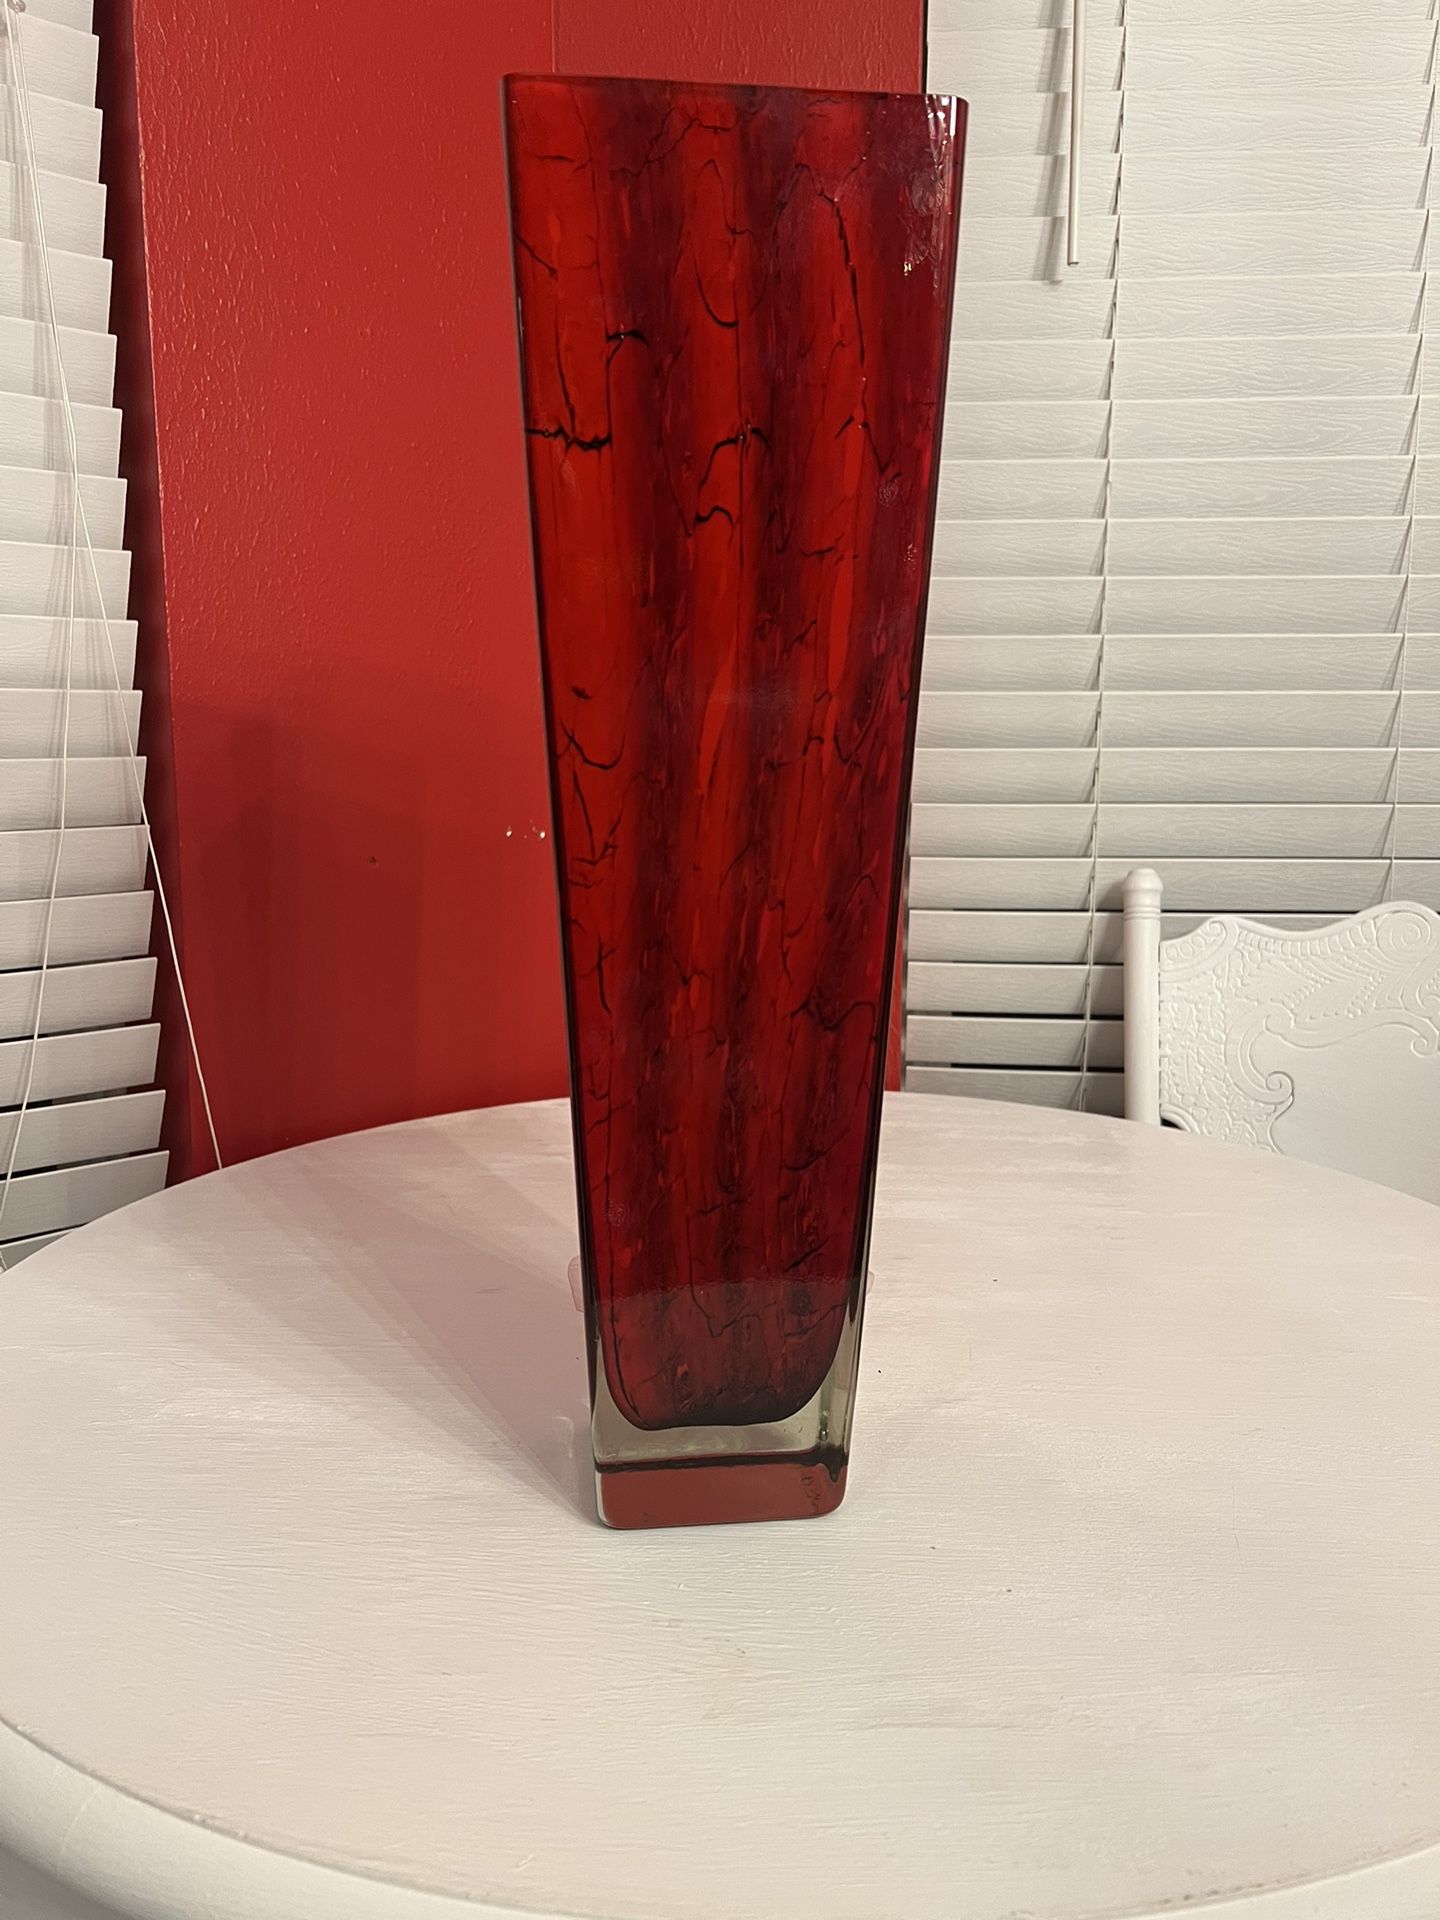 TALL RED UNIQUE HAND BLOWN ART GLASS VASE BLACK STRIPES 19” 1/2 Tall